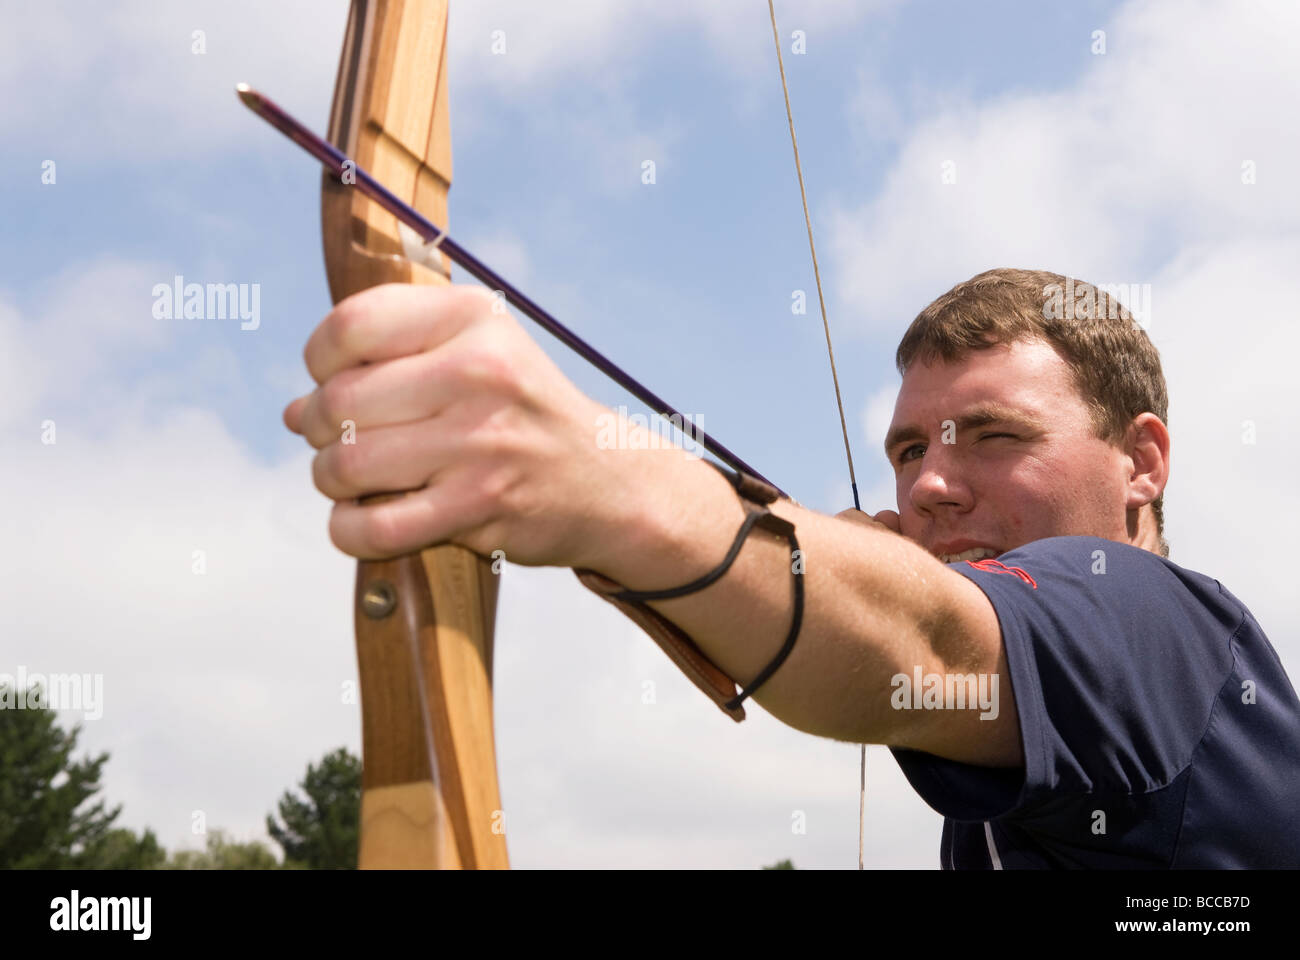 21 year old man trying archery at a summer fair in Blackmoor near Bordon, Hampshire, UK. Stock Photo